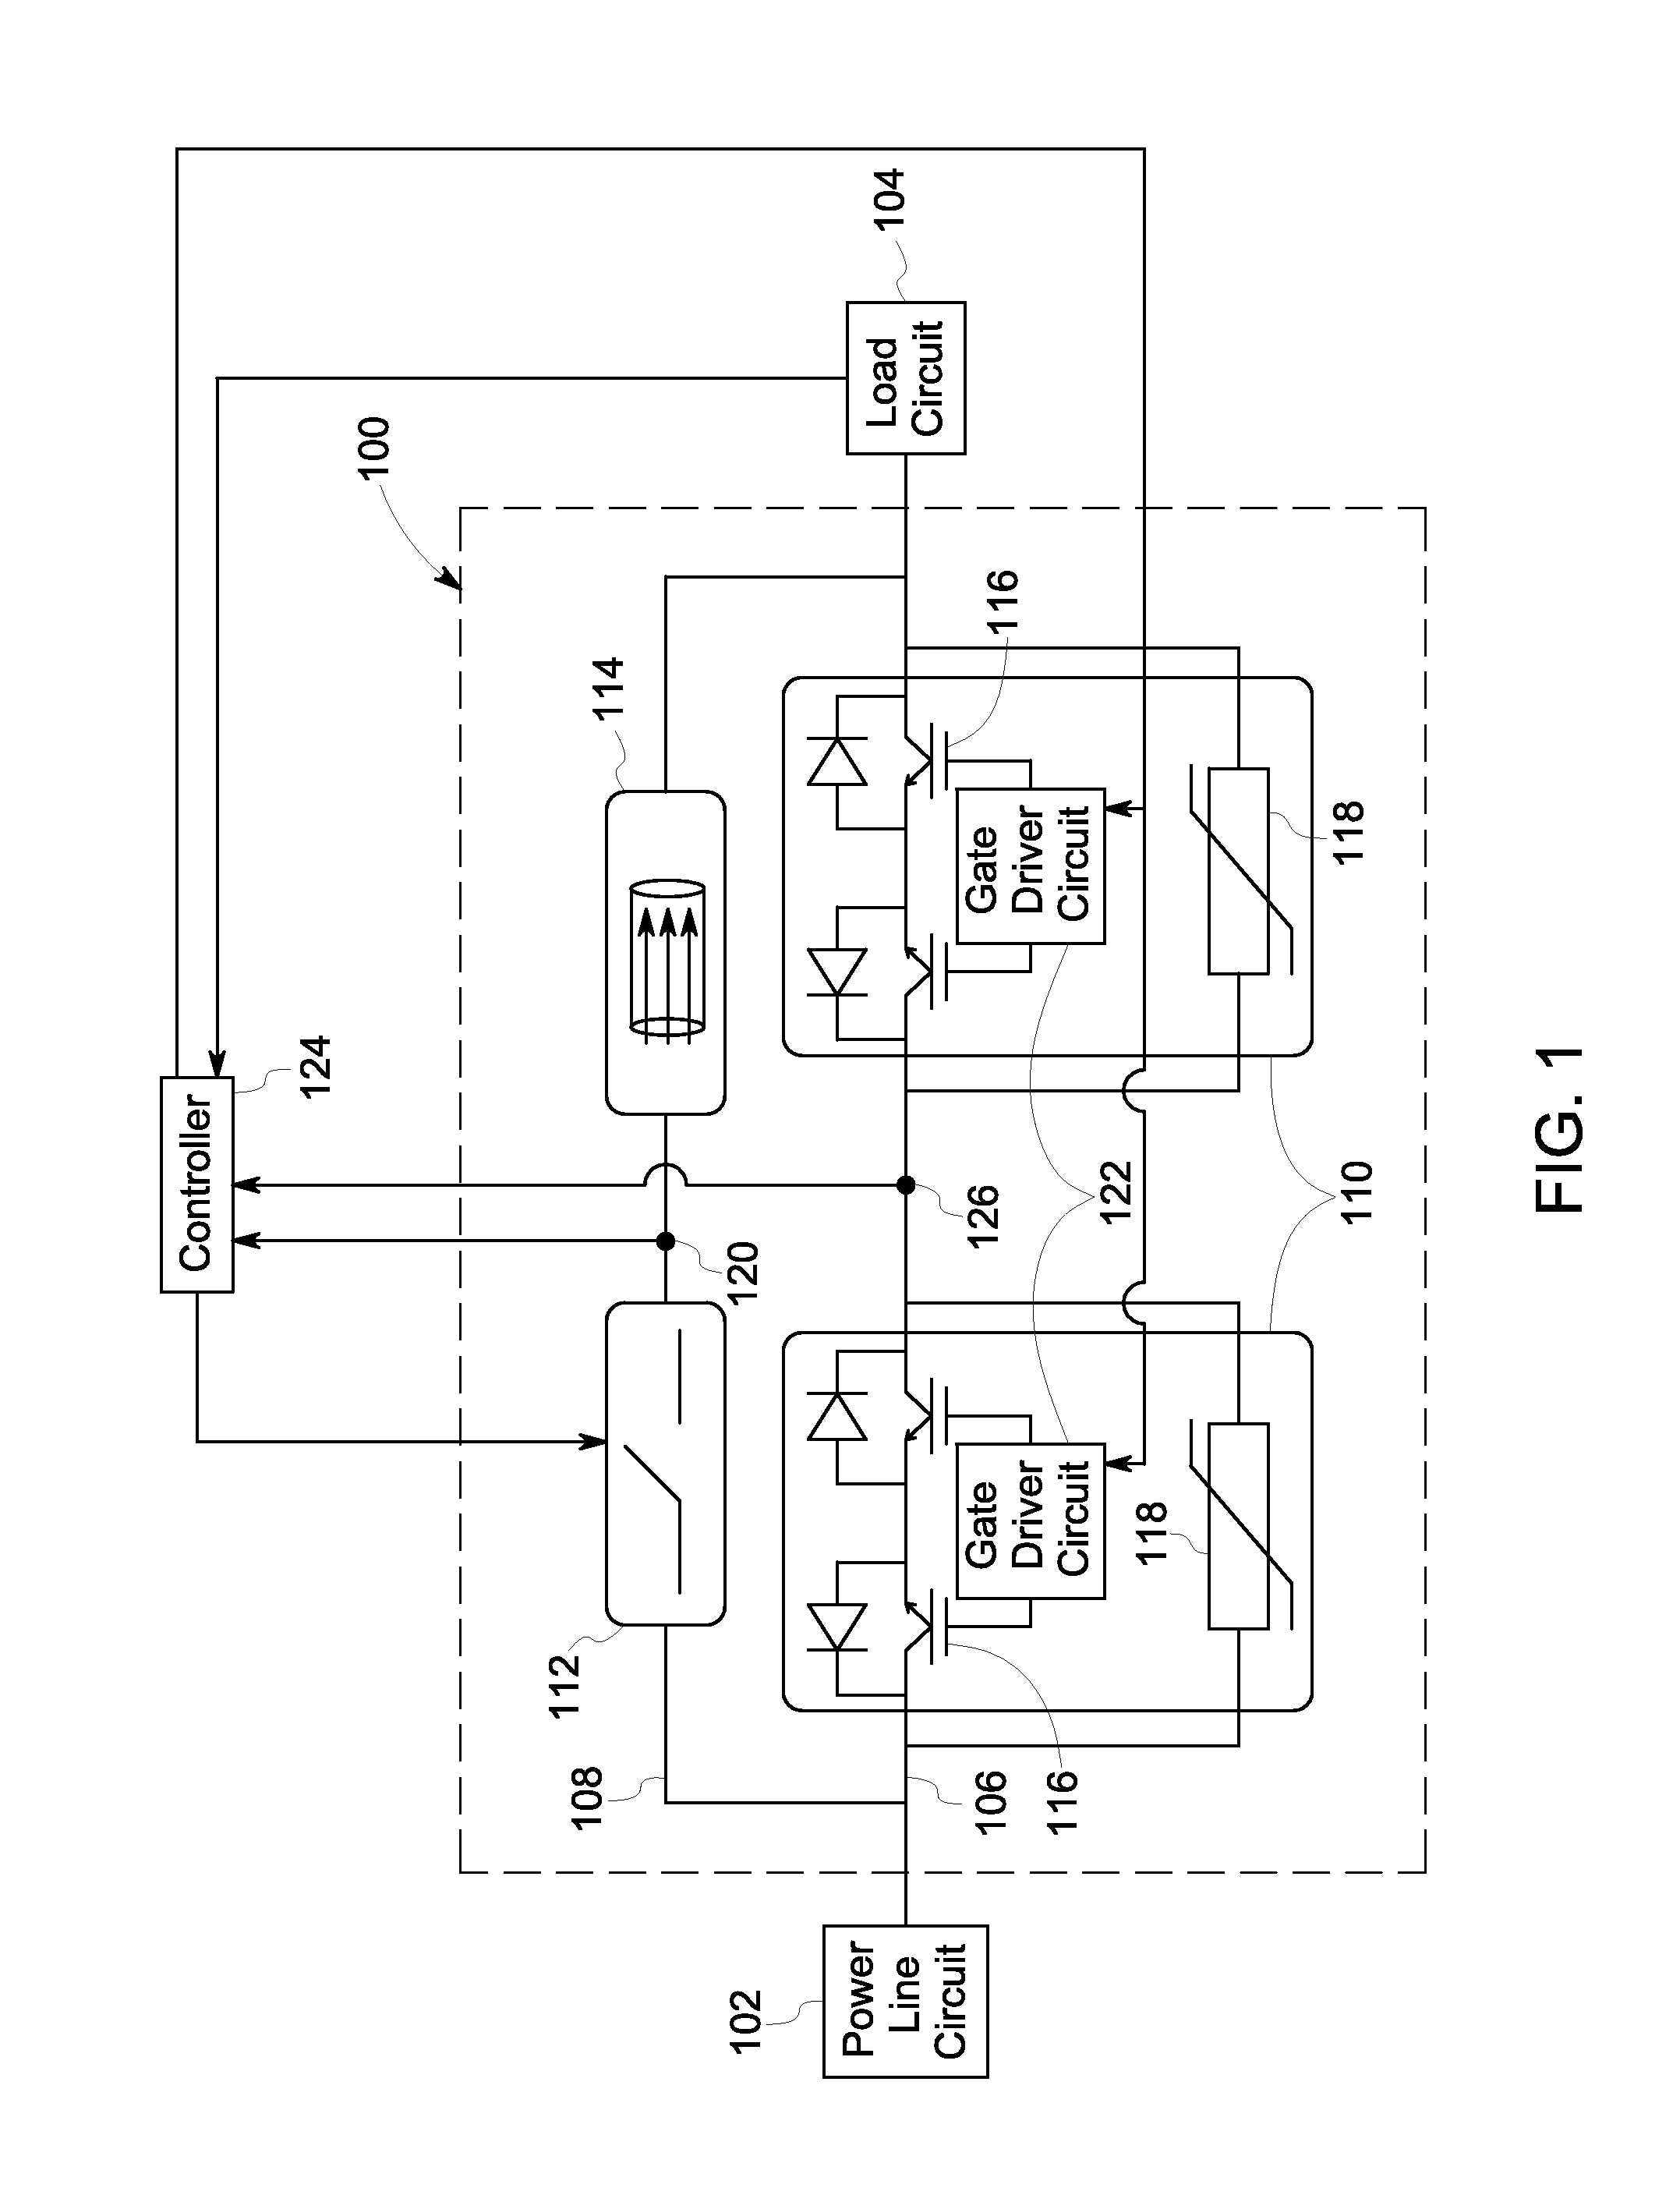 Hybrid direct-current circuit breaker